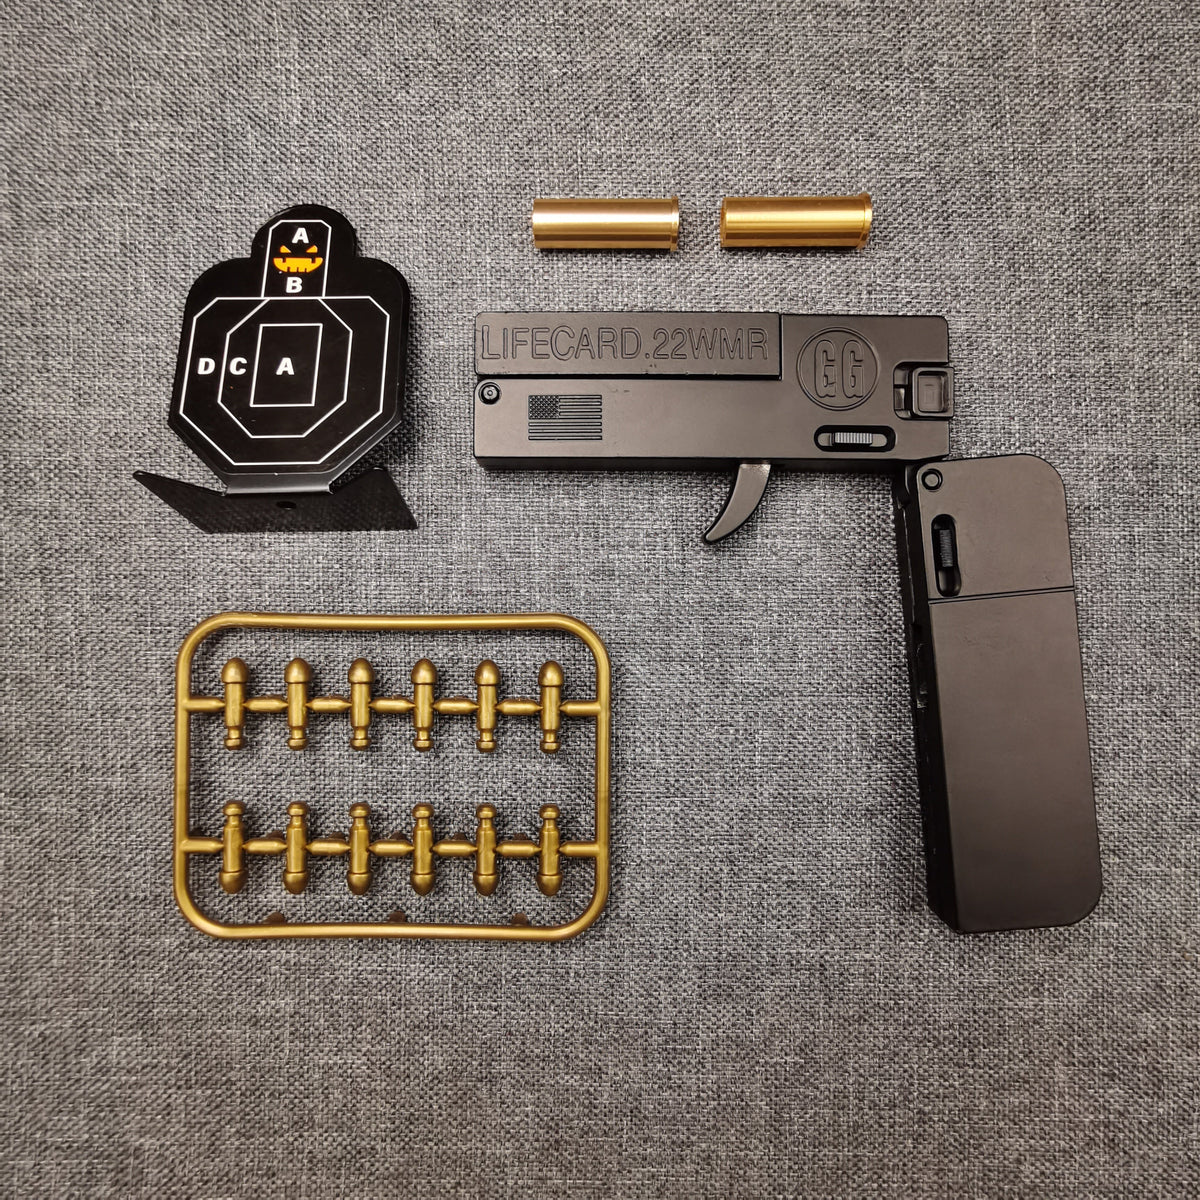 Folding Glock Toy Pistol – Csnoobs Online Store